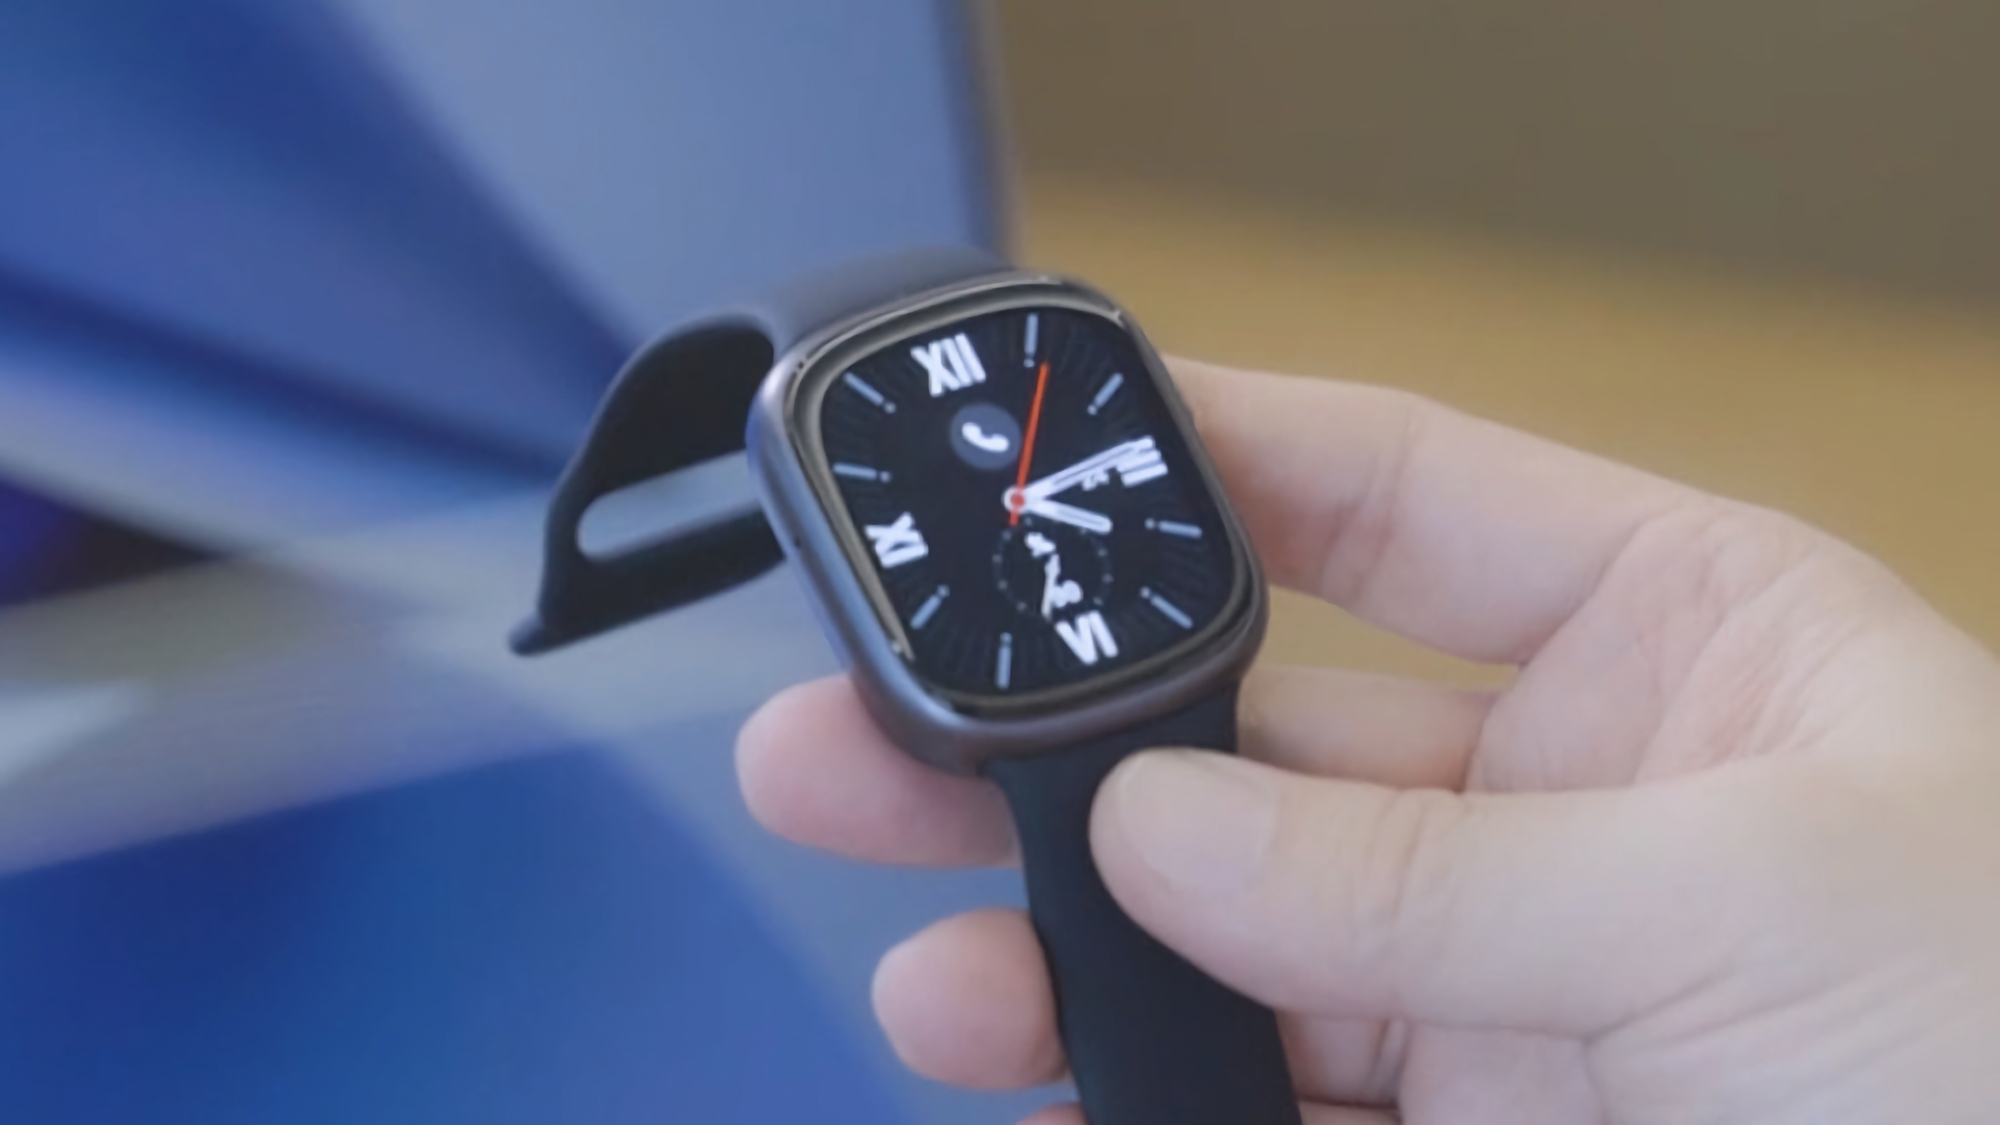 Amazon.com: Honor Watch GS Pro Smart Watch 1.39